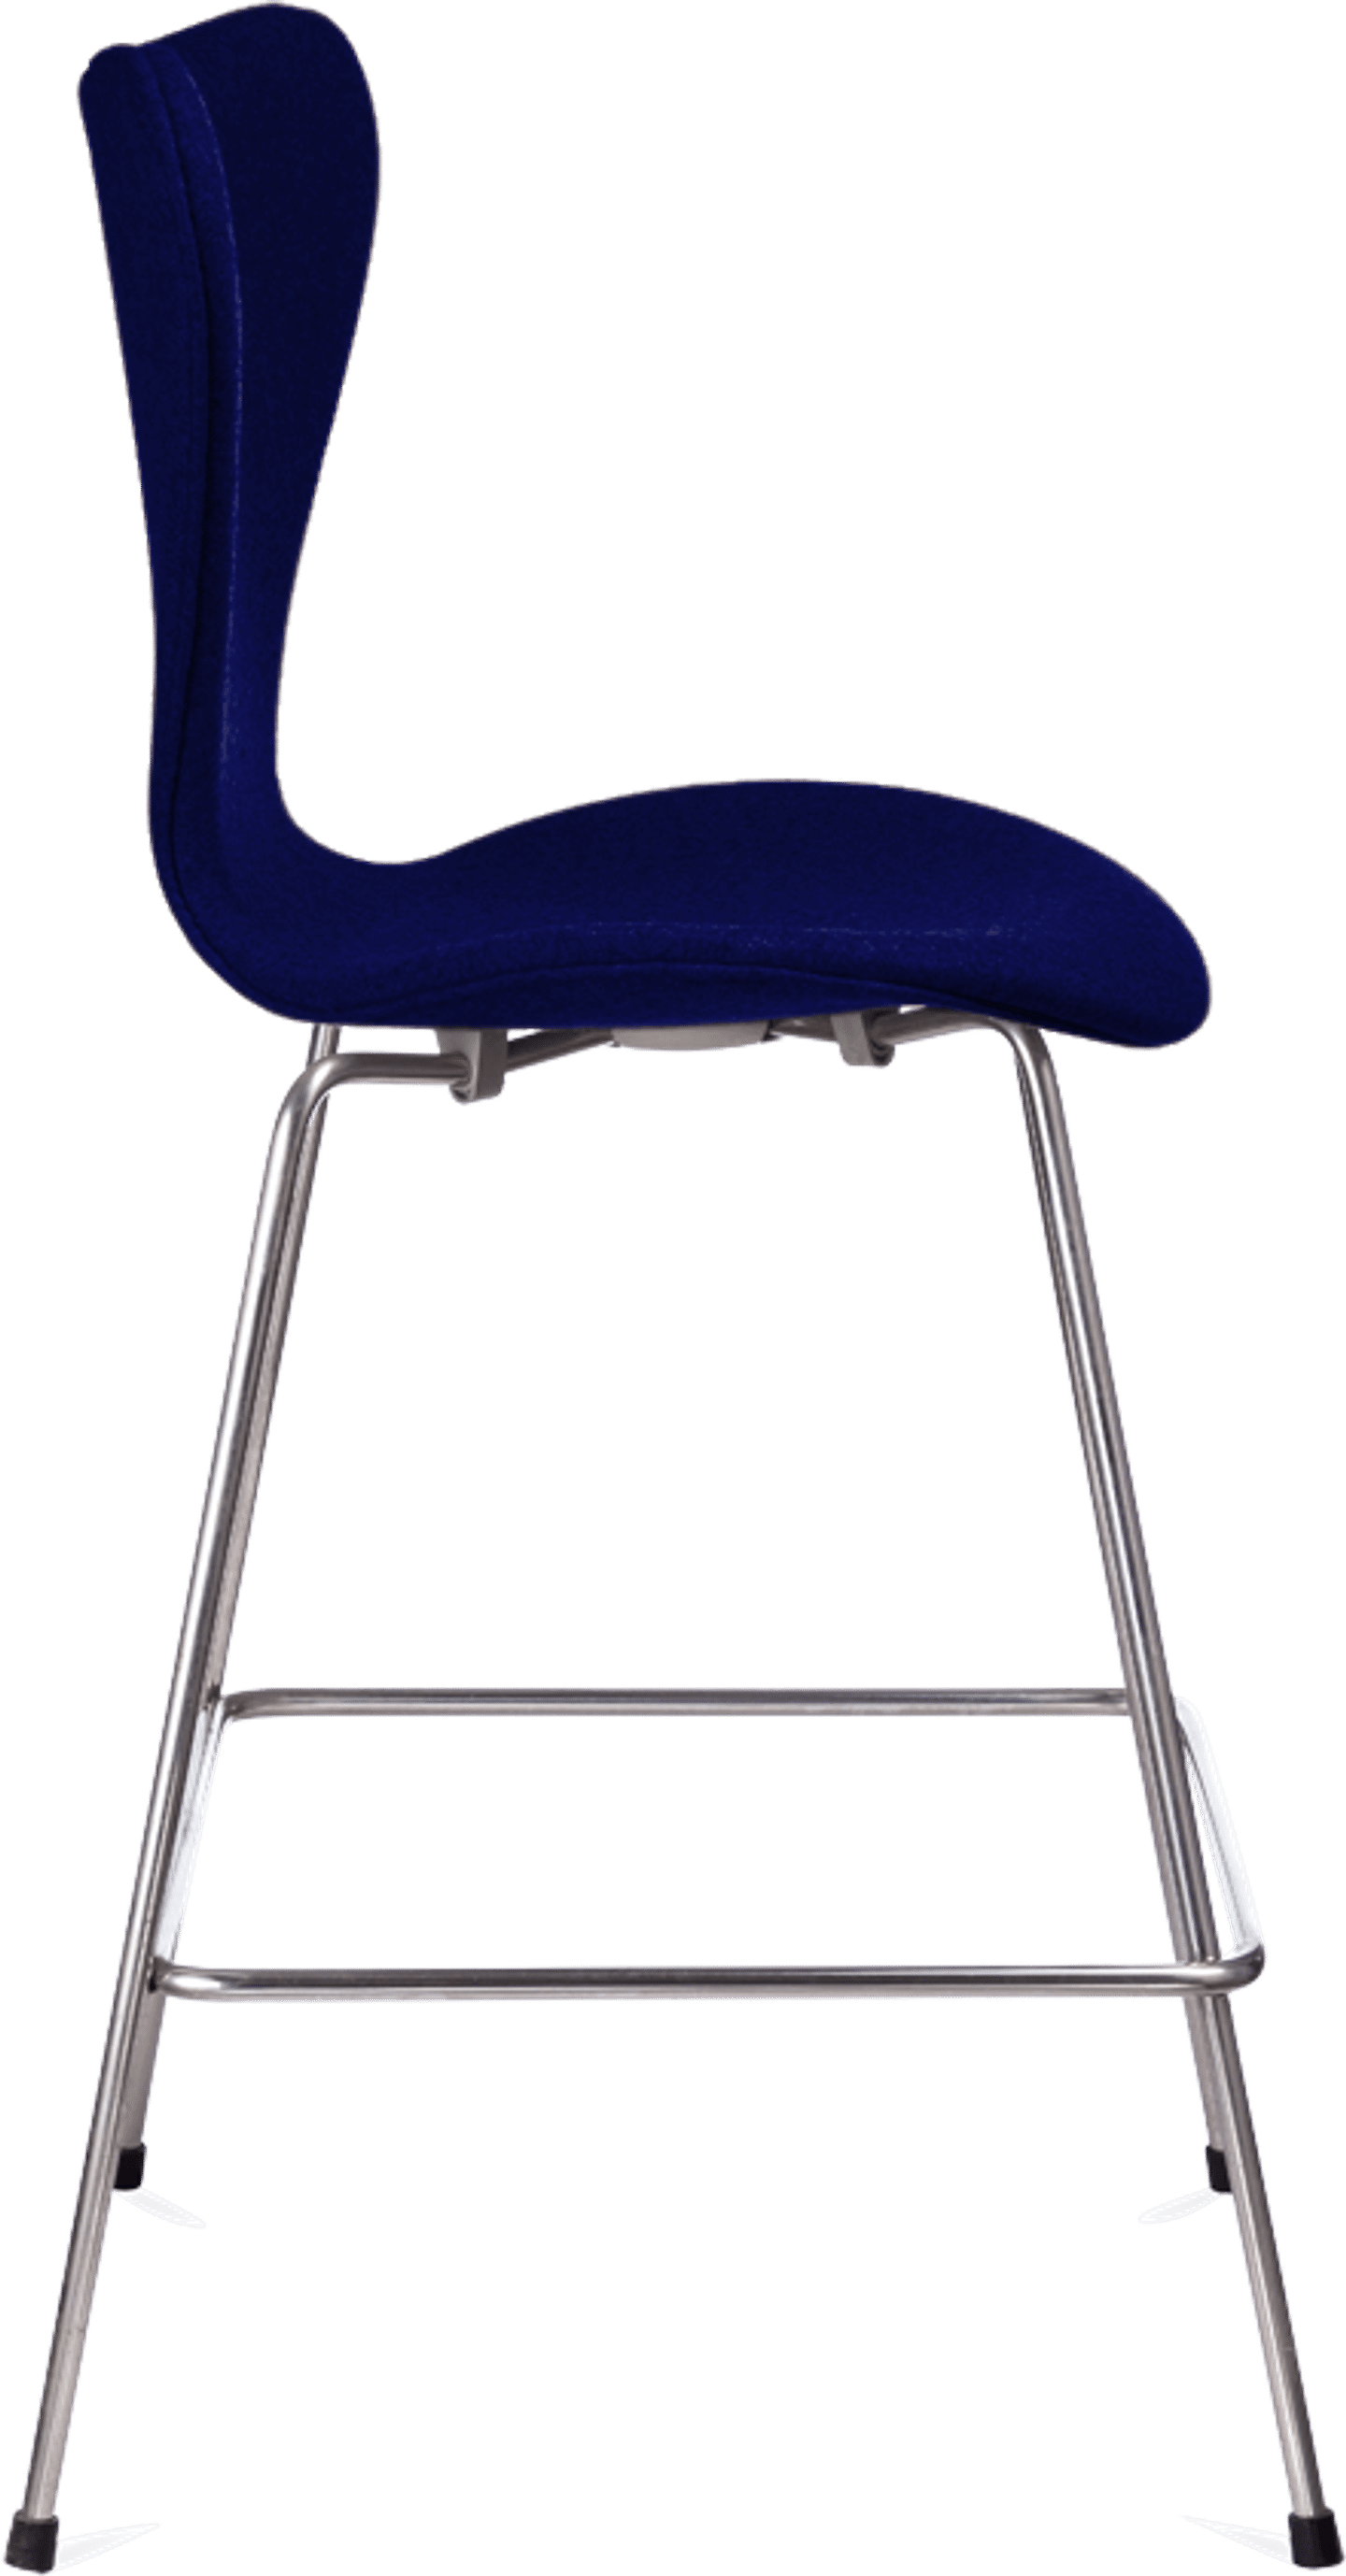 Series 7 Barstool Upholstered Blue image.